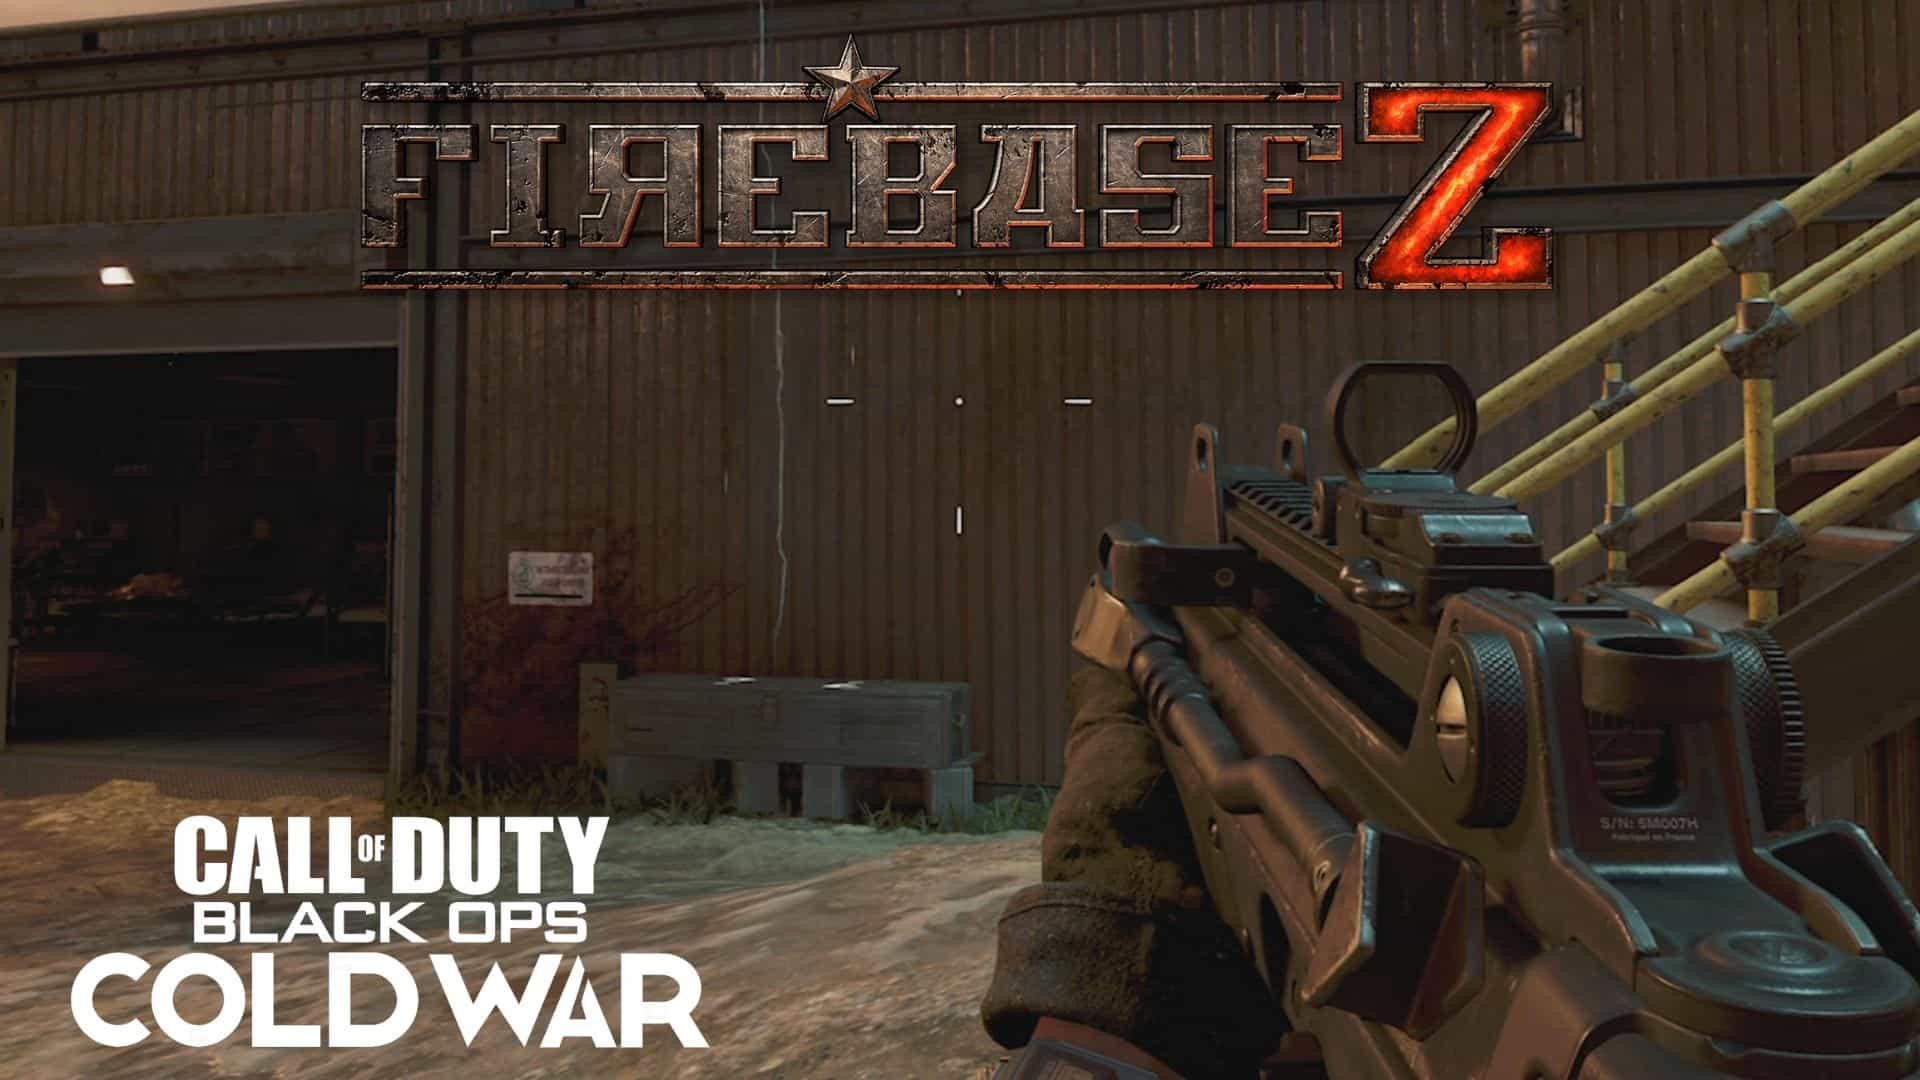 Firebase-Z-Call-Of-Duty-Black-Ops-Cold-War-Zombies.jpg